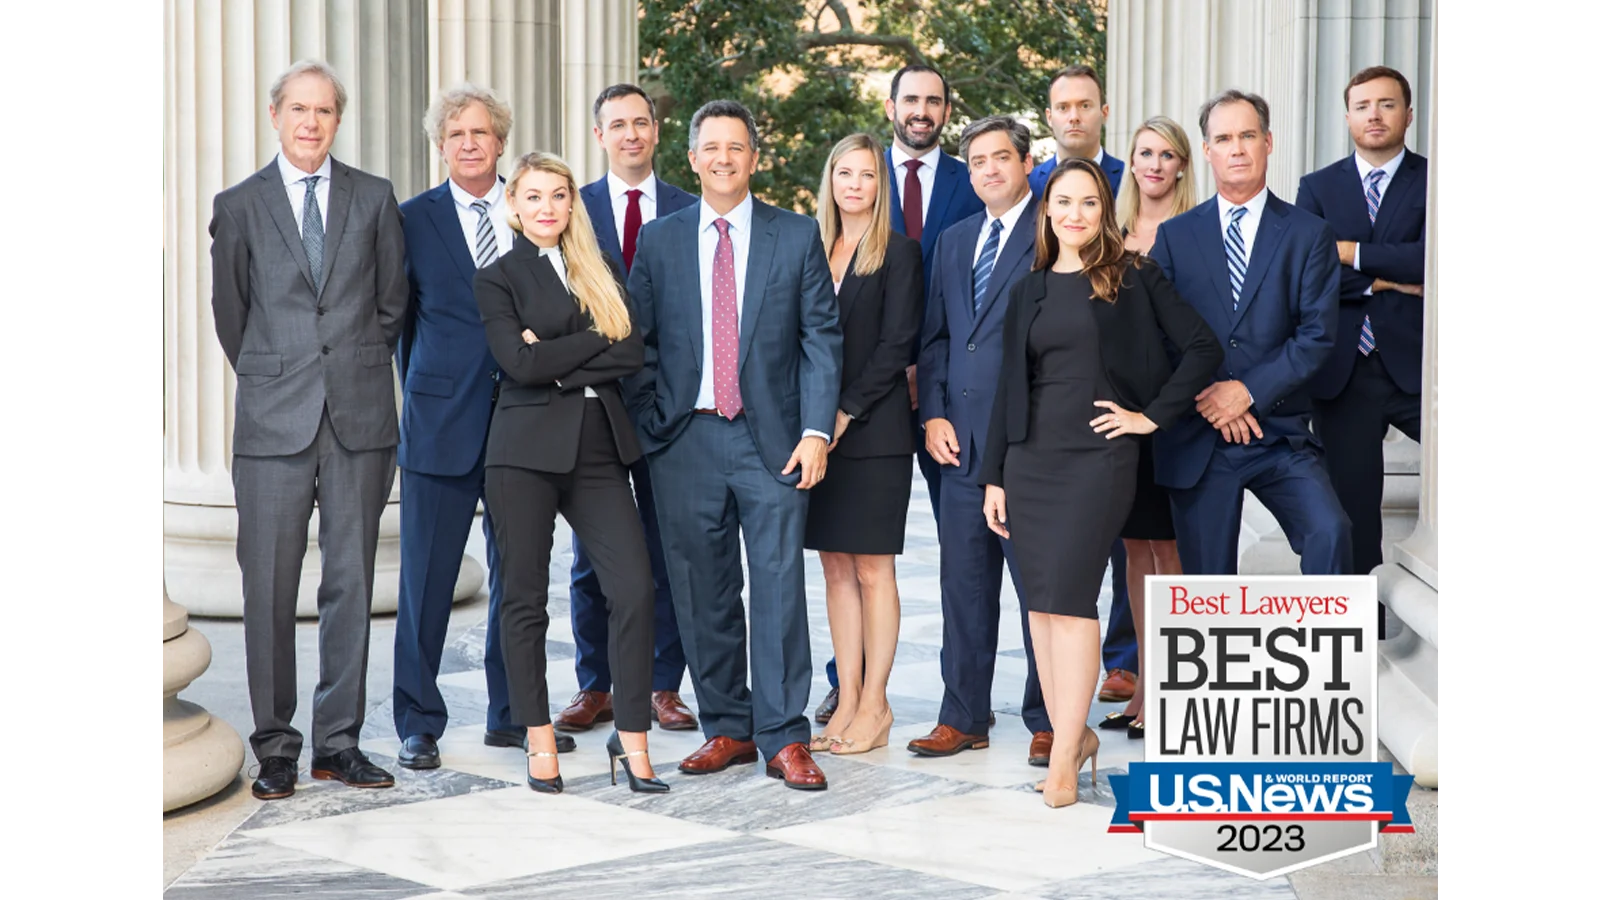 Premio al mejor bufete de abogados 2023 Charleston SC | U.S. News and World Report Best Law Firm South Carolina | Steinberg Law Firm